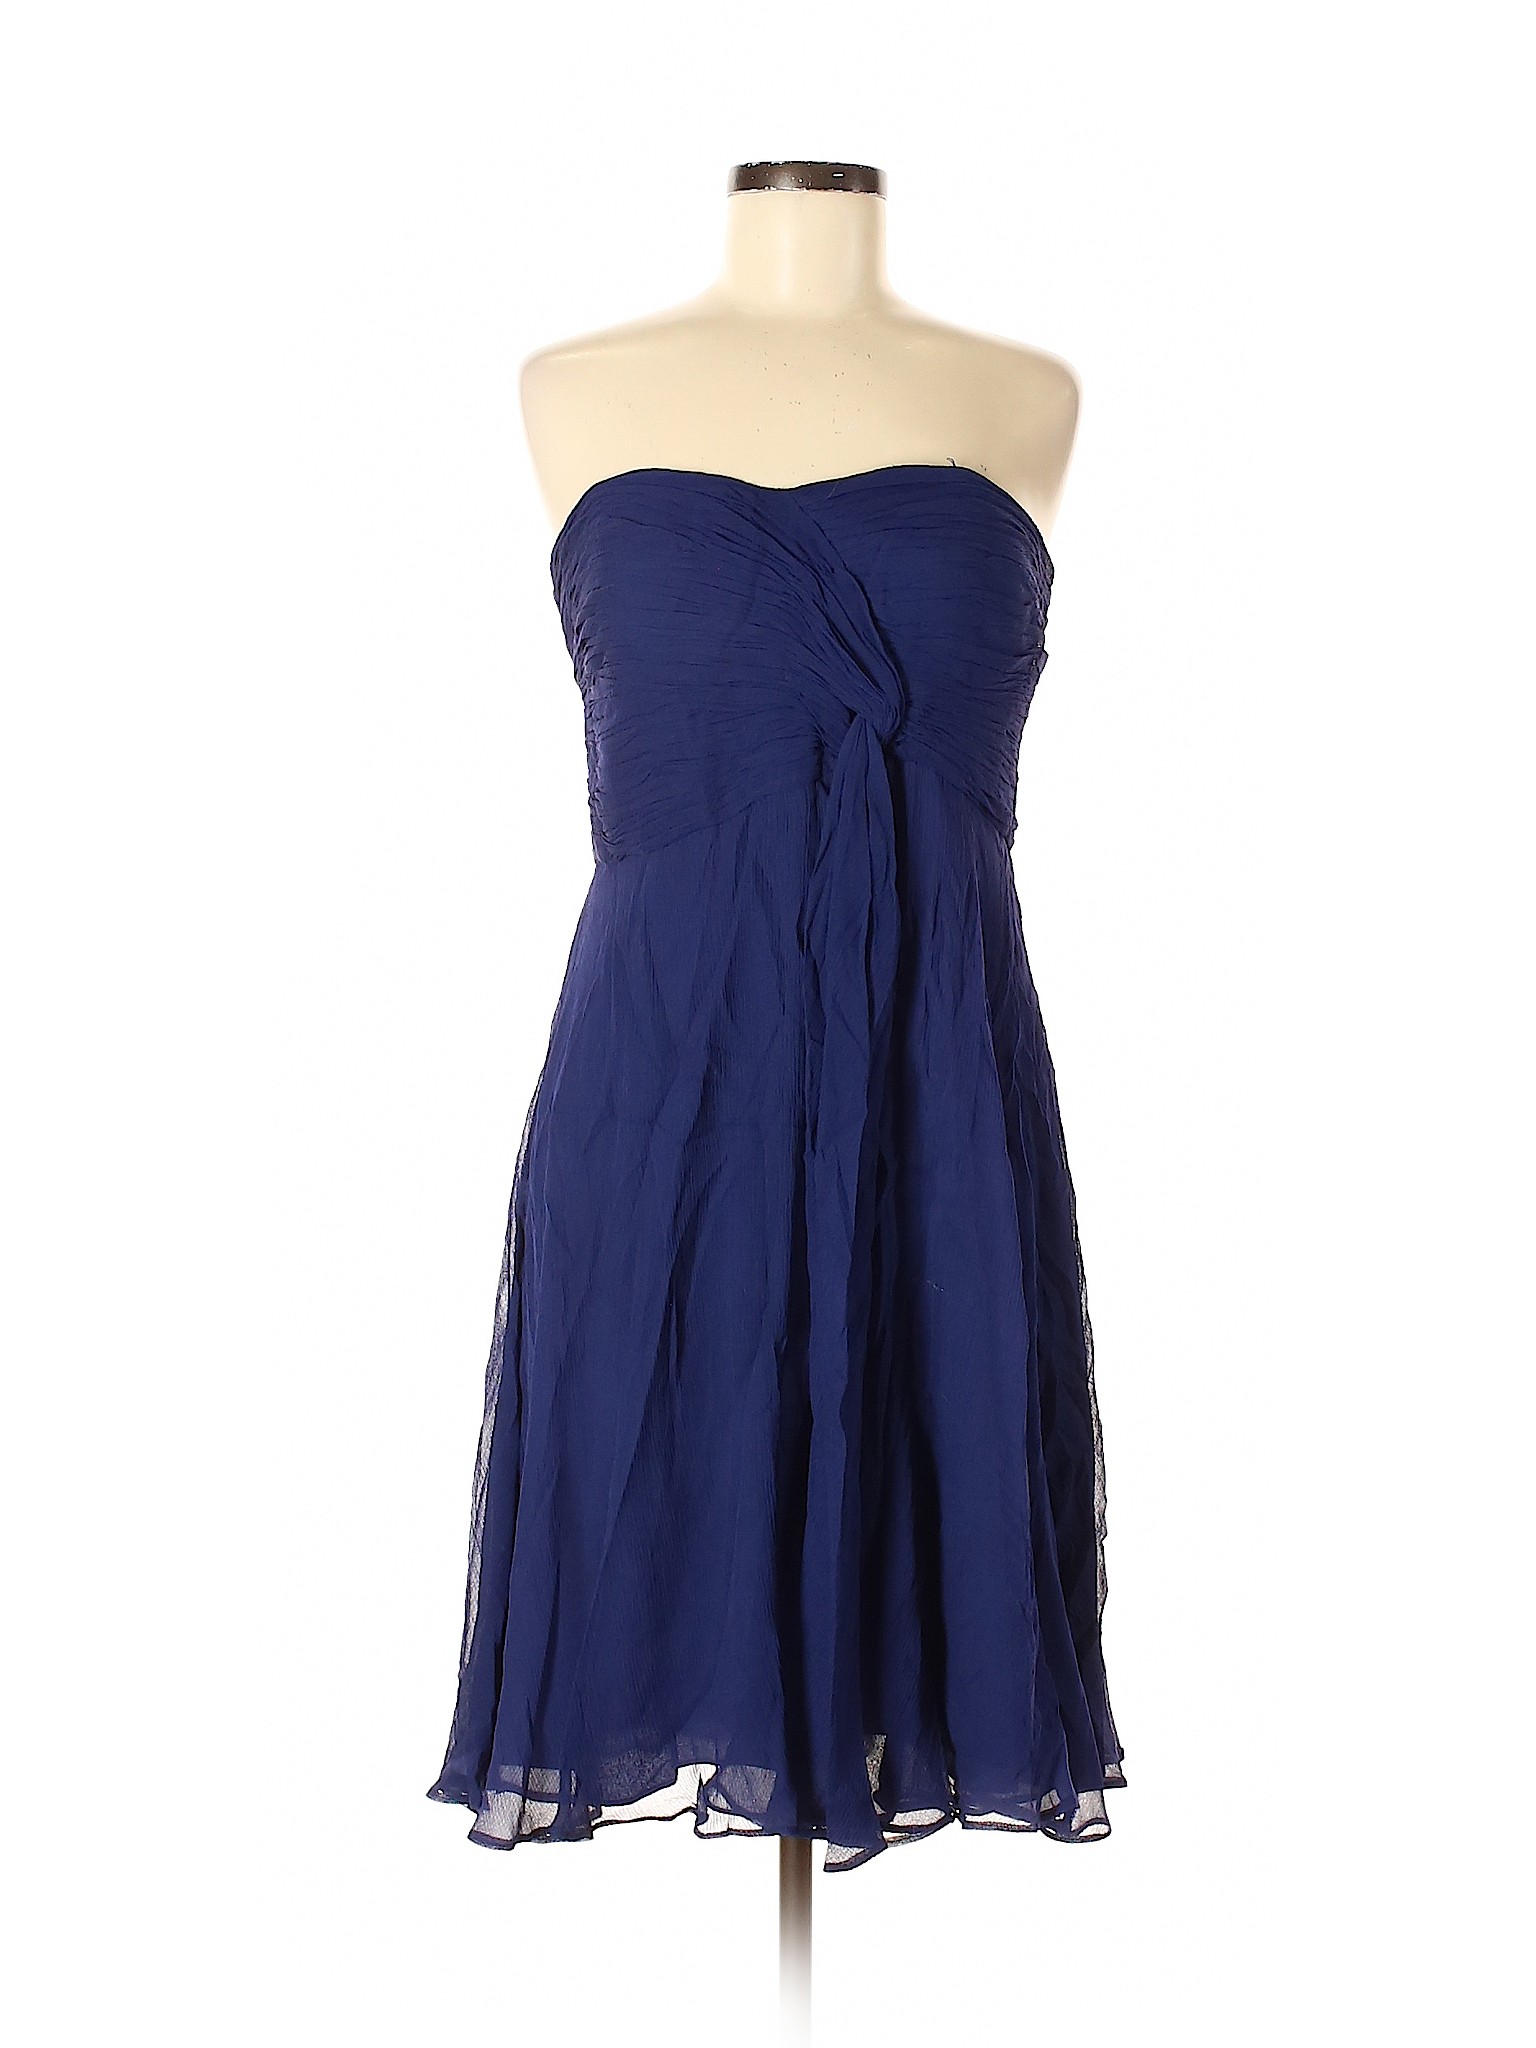 Dm Donna Morgan Women Blue Cocktail Dress 8 | eBay